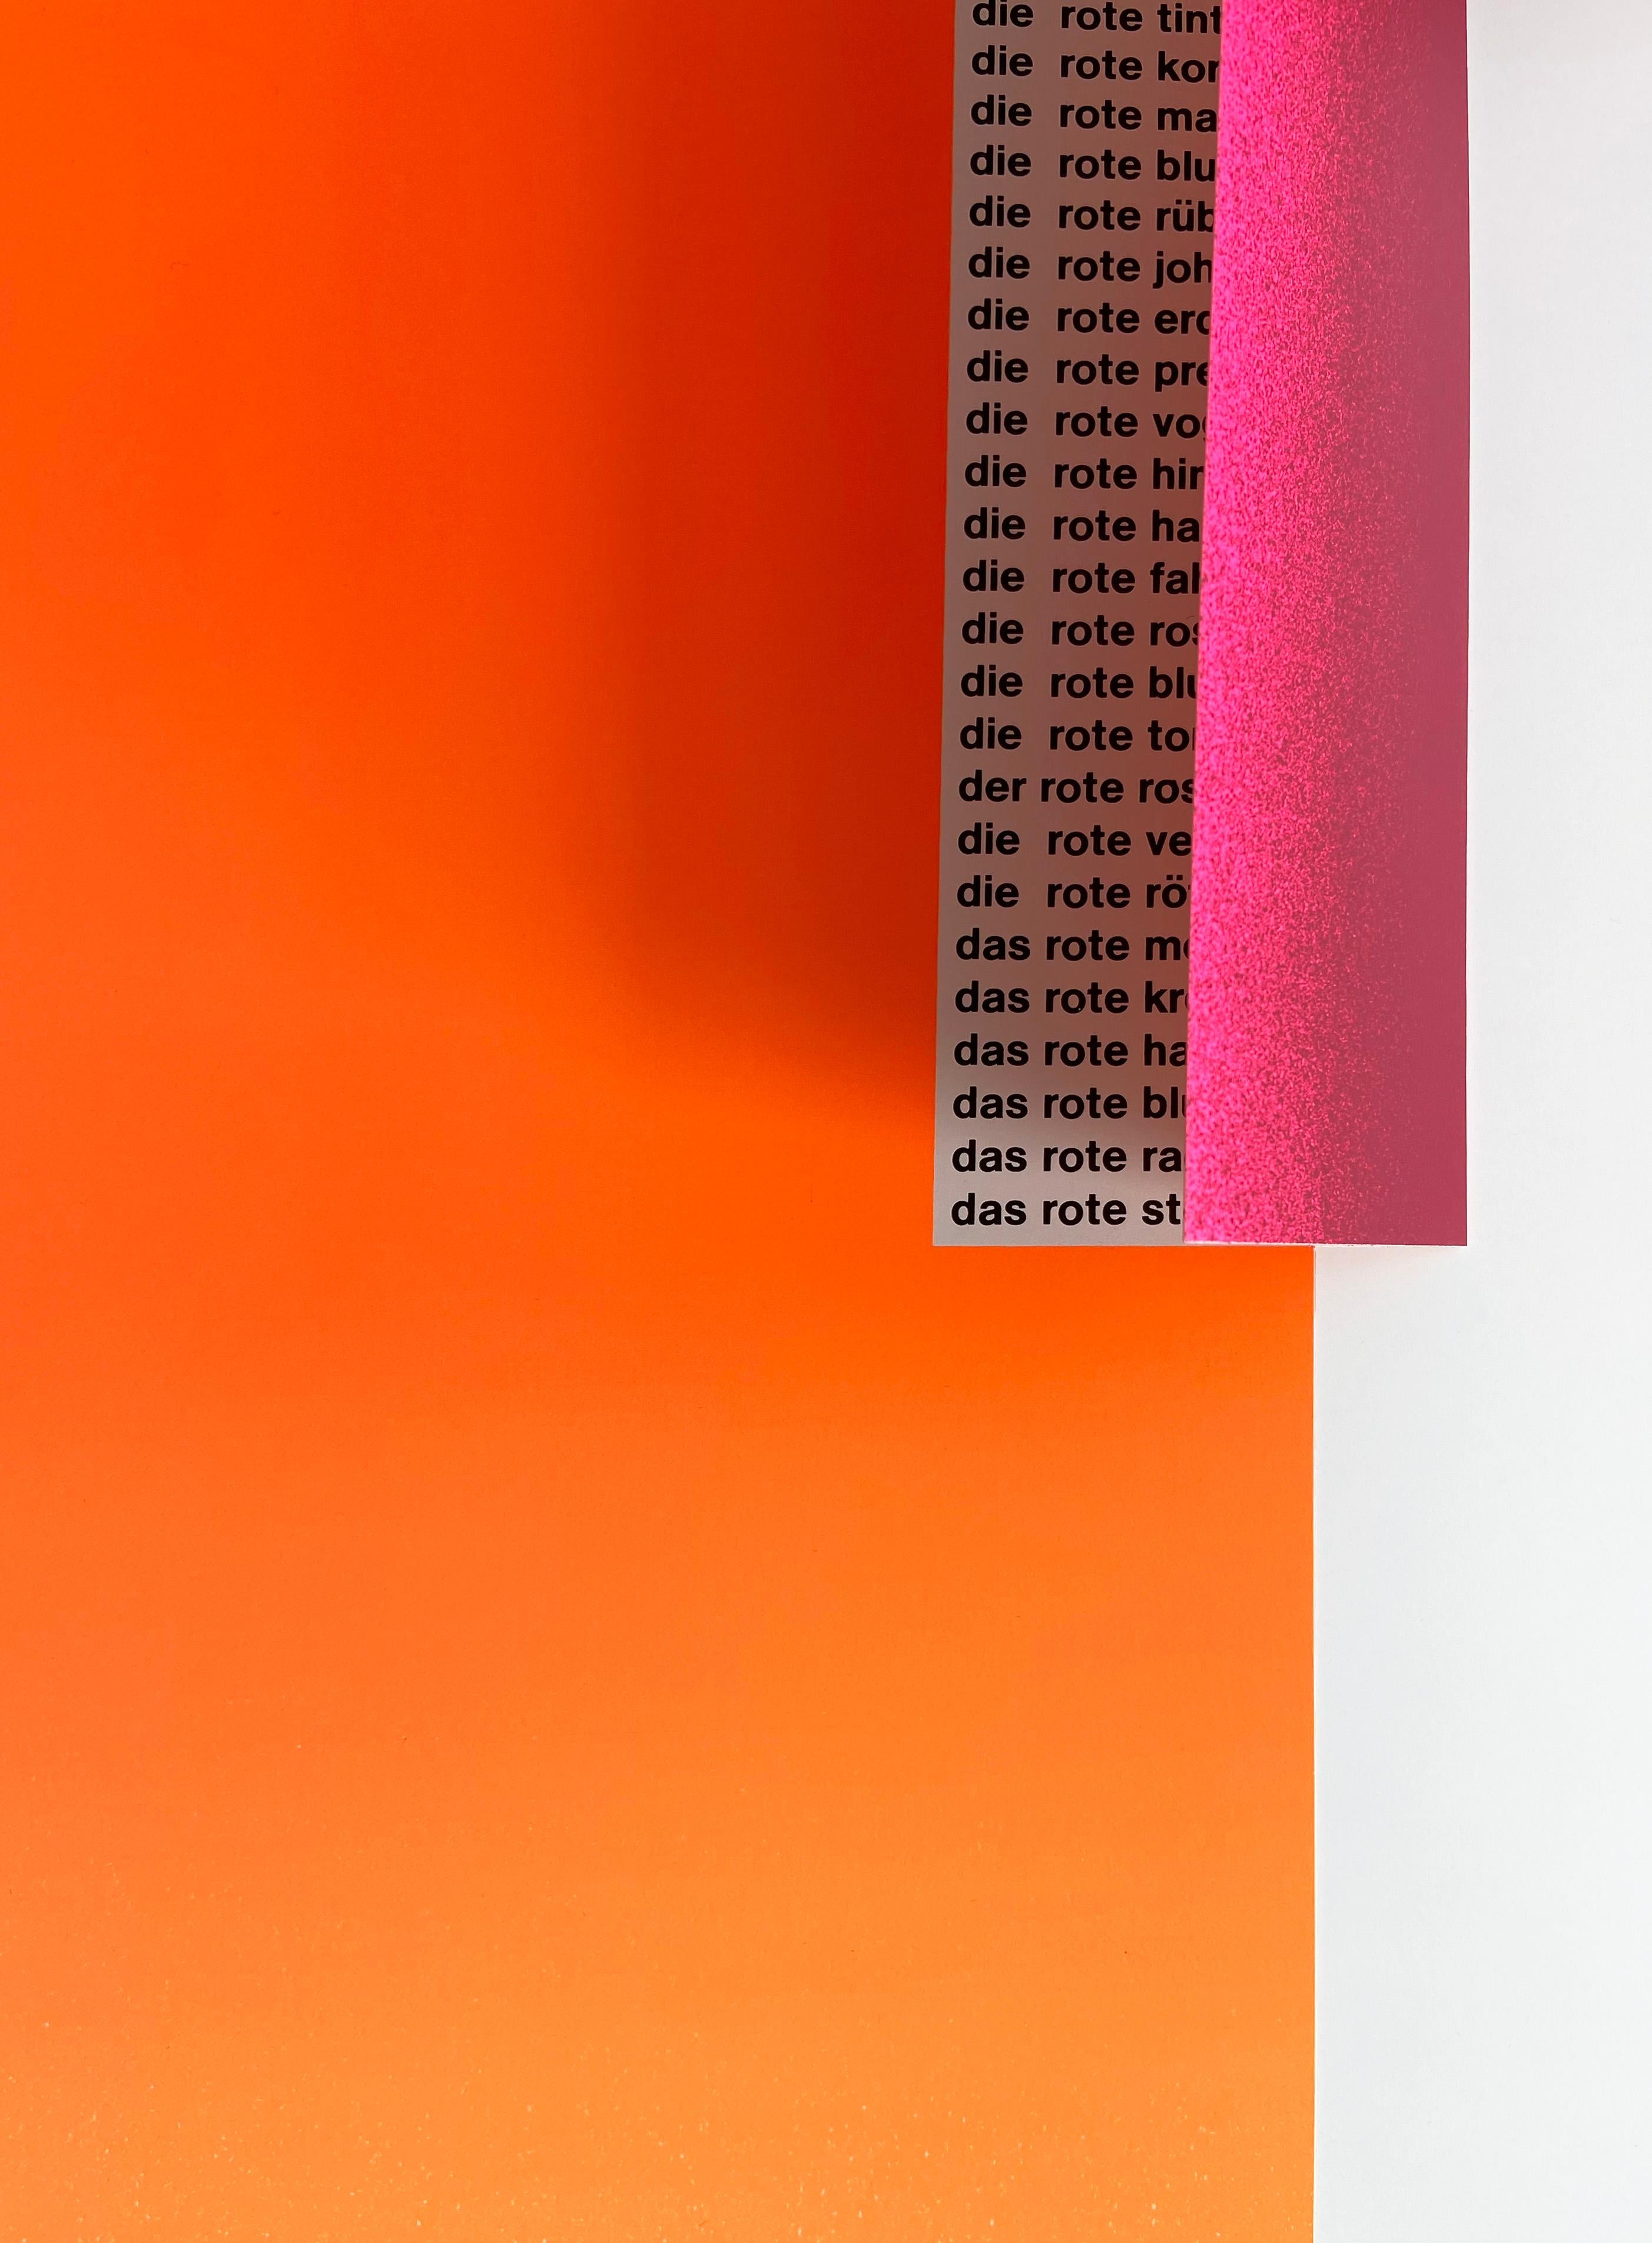 Rupprecht Geiger (German, 1908-2009)
Cold Reds on Orange (No. 5 from All die Roten Farben…), 1981
Medium: Screenprint on cardboard
Dimensions: 39.5 x 40 cm
Edition of 100 + XX: Hand signed in pencil, verso
Publisher: Guido Hildebrandt Verlag,